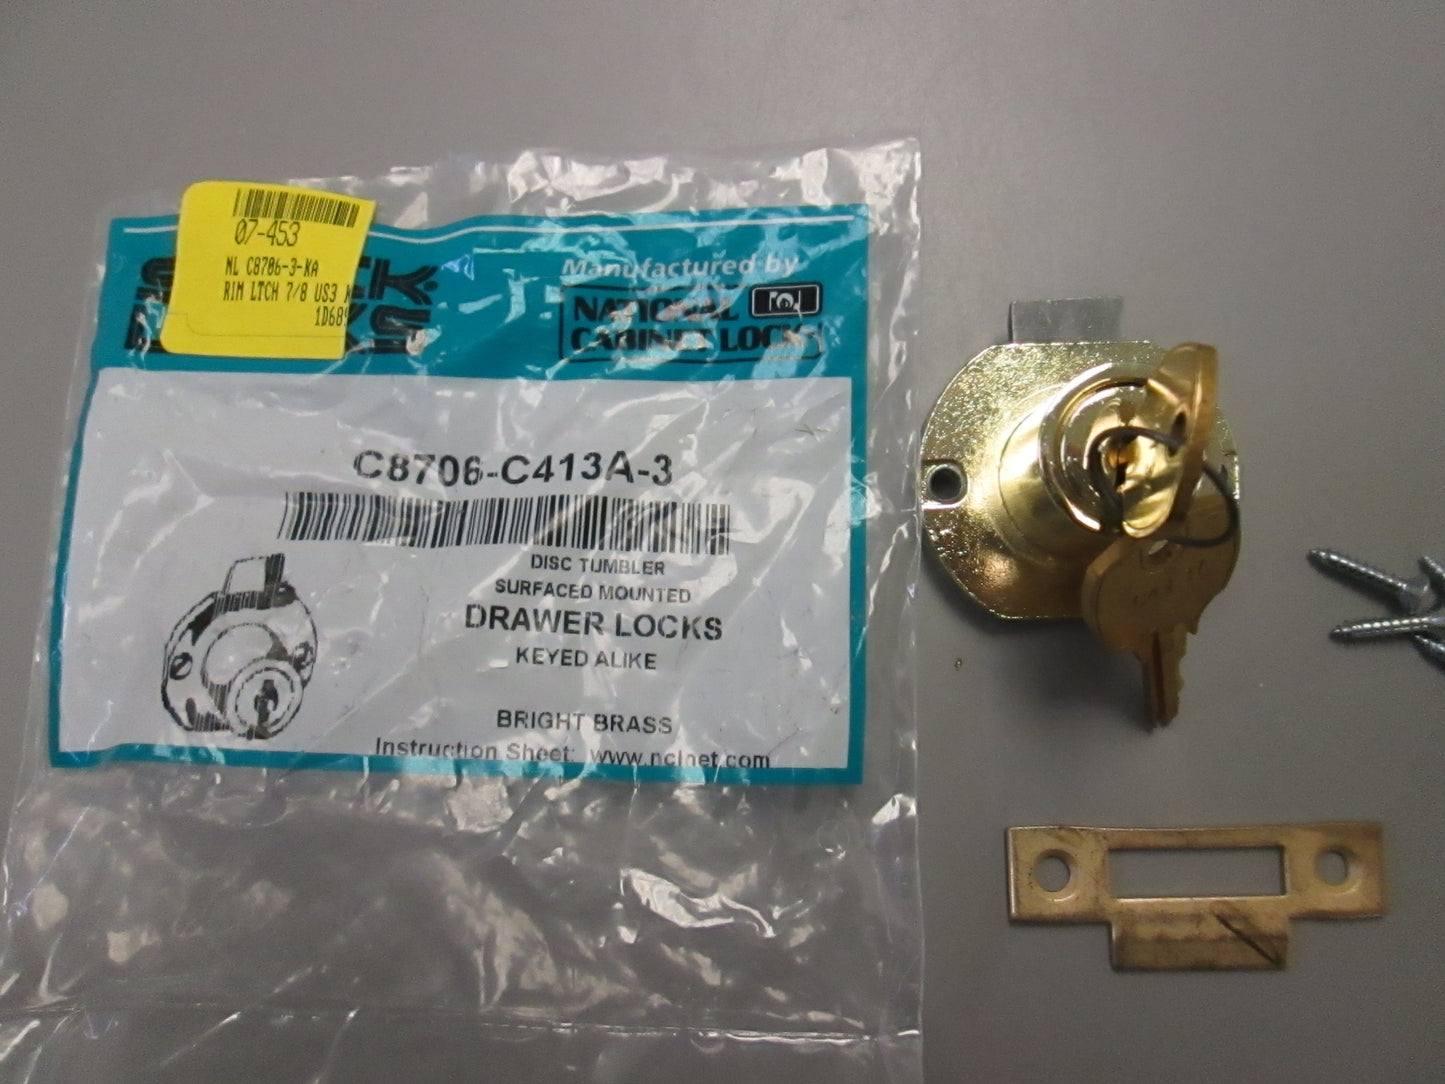 CompX National C8706-3-ka 3PACK Disc Tumbler Drawer Lock